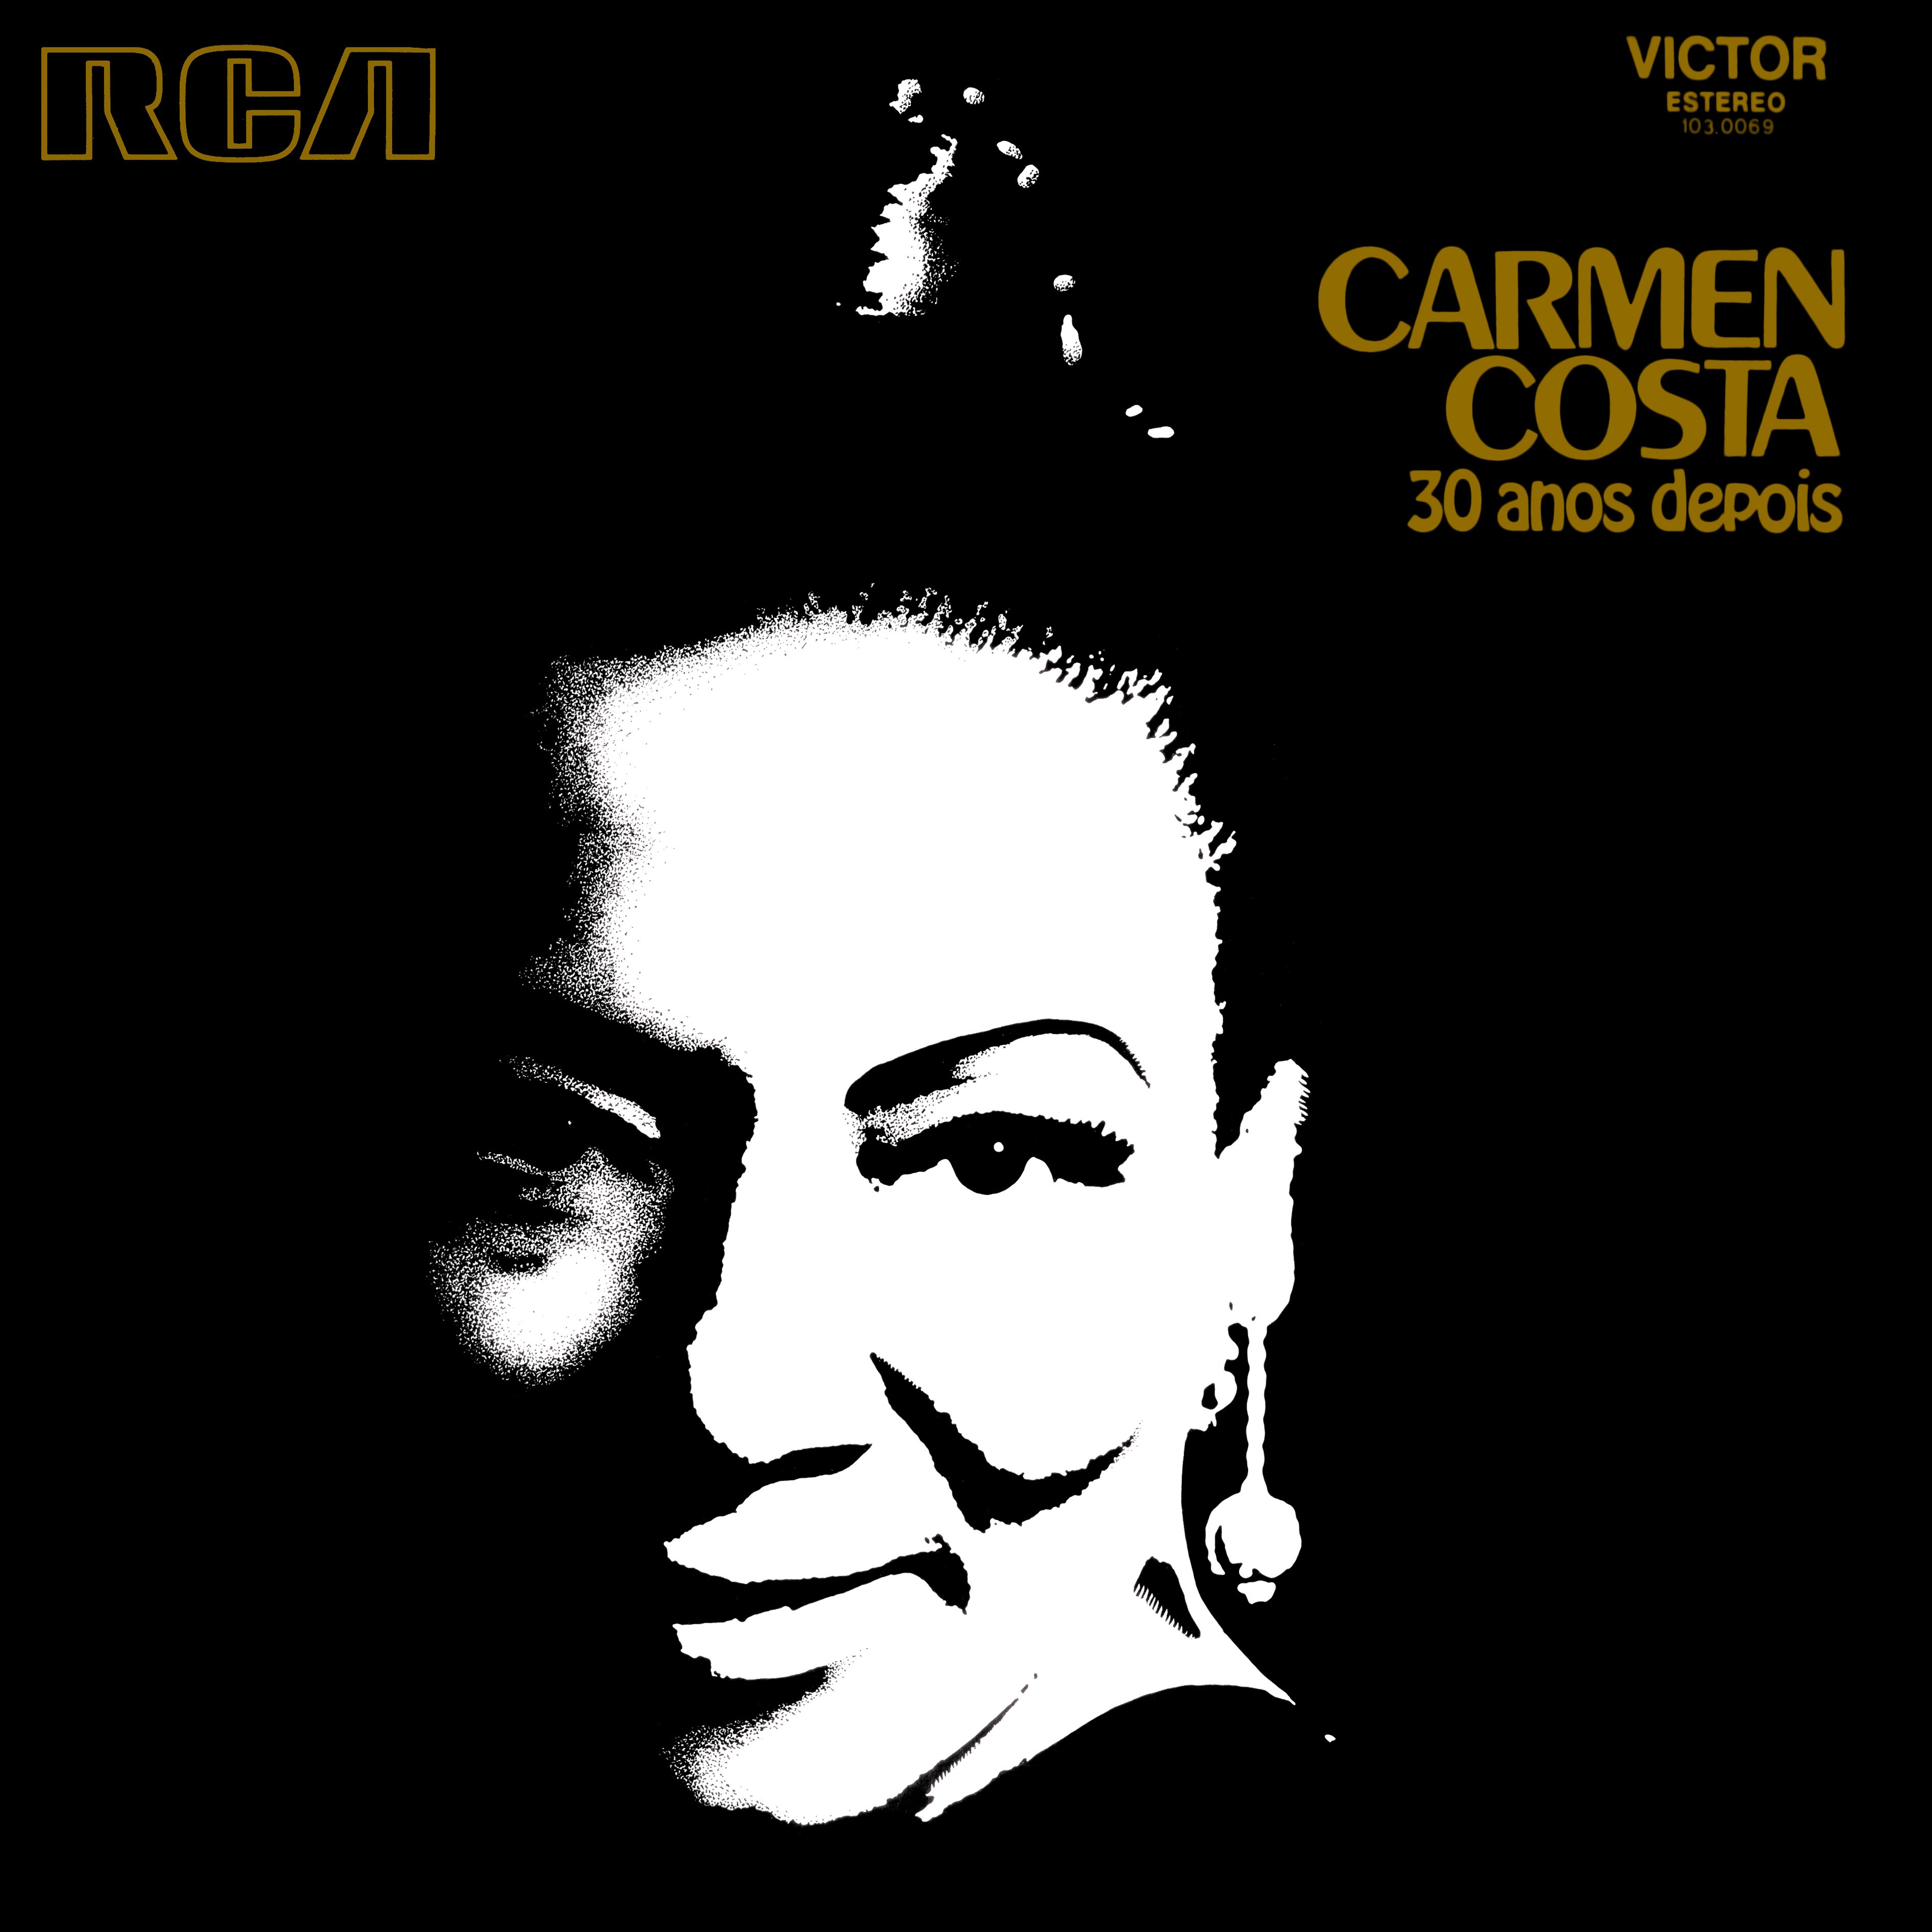 Carmen Costa Biografia - Carmelita Madriaga